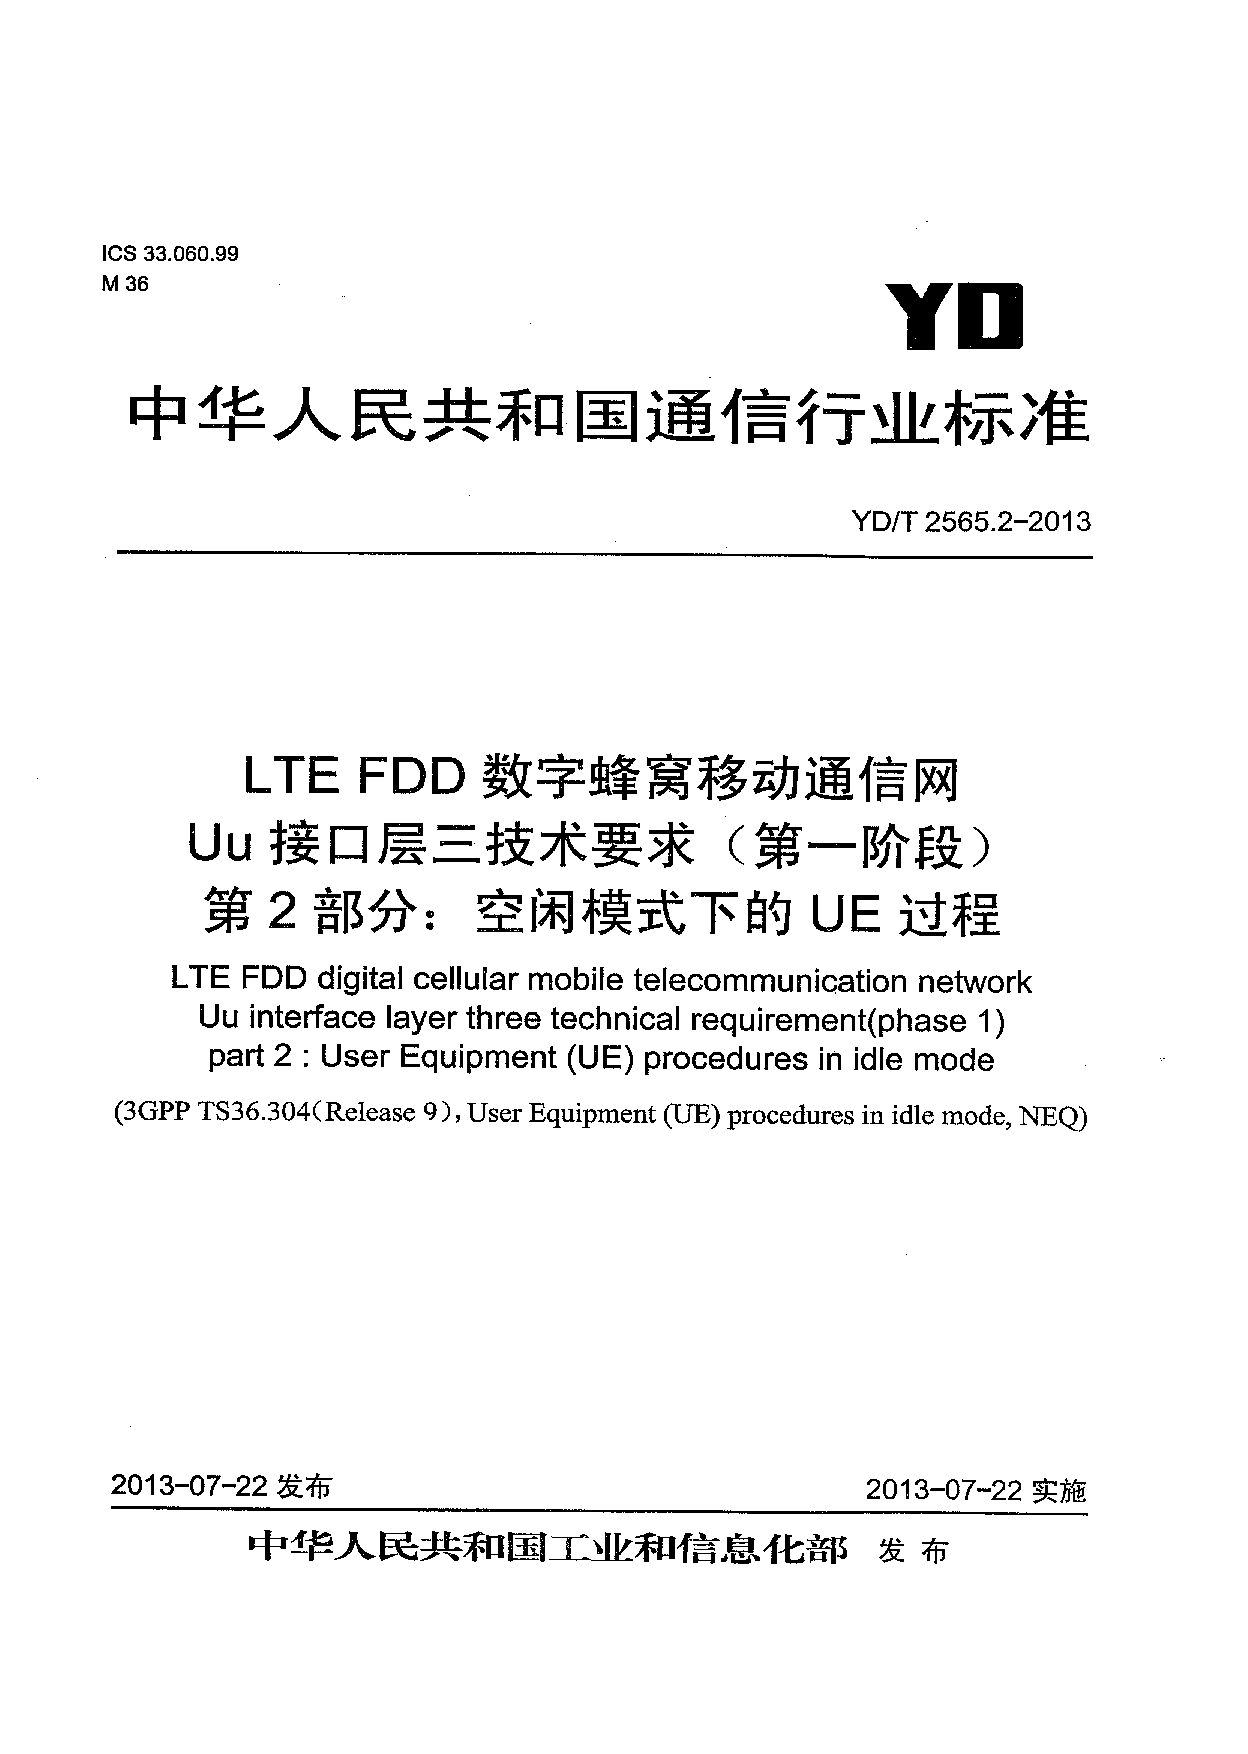 YD/T 2565.2-2013封面图